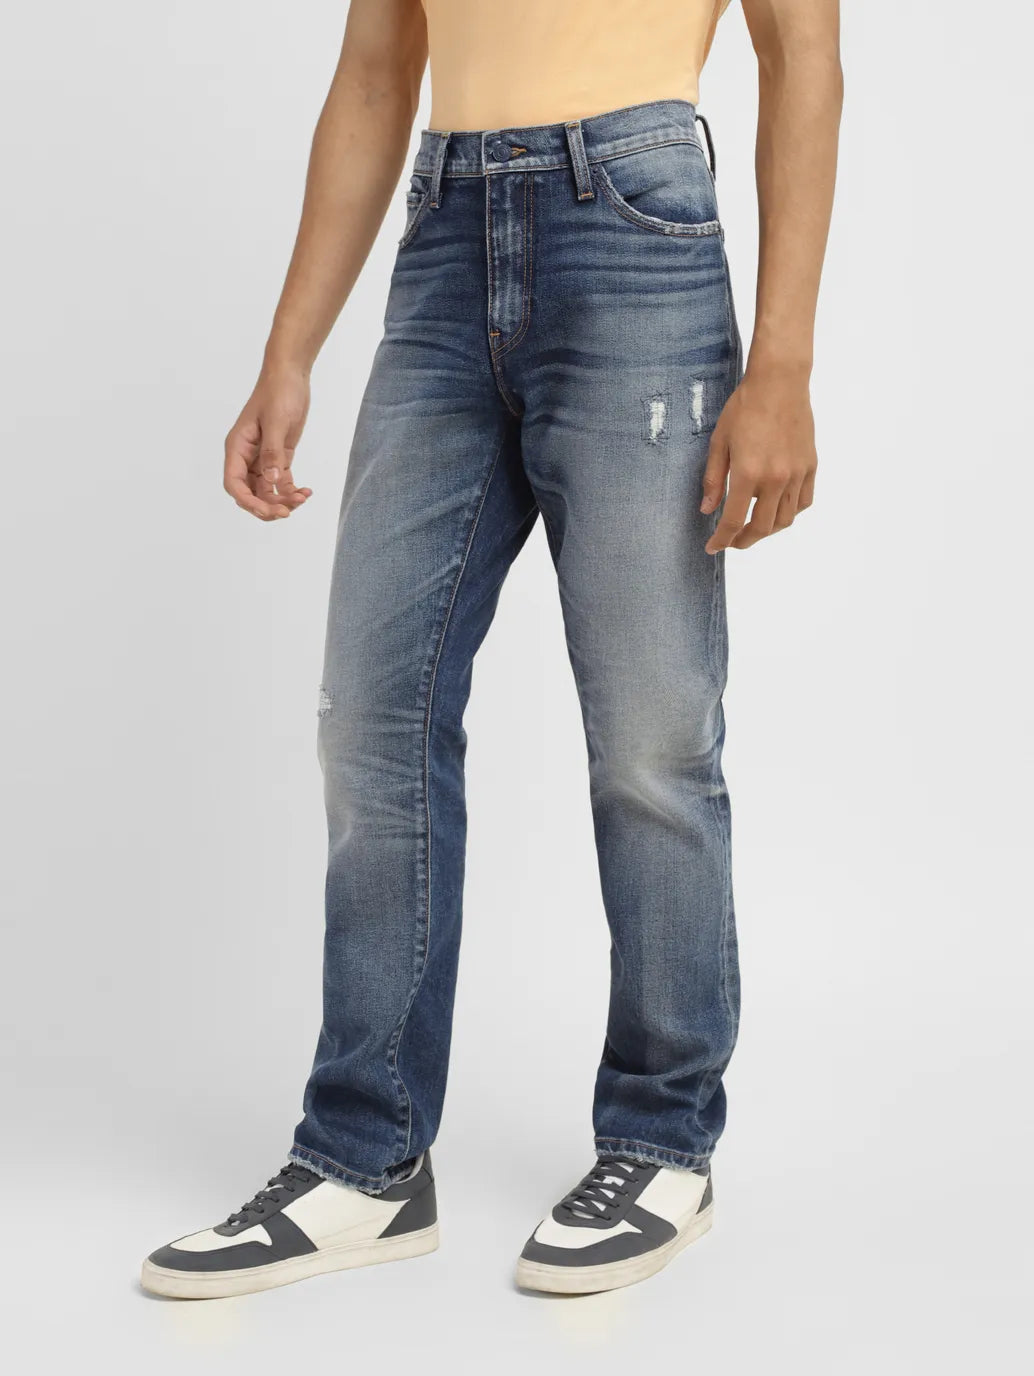 Men's 512 Mid Indigo Slim Tapered Fit Jeans